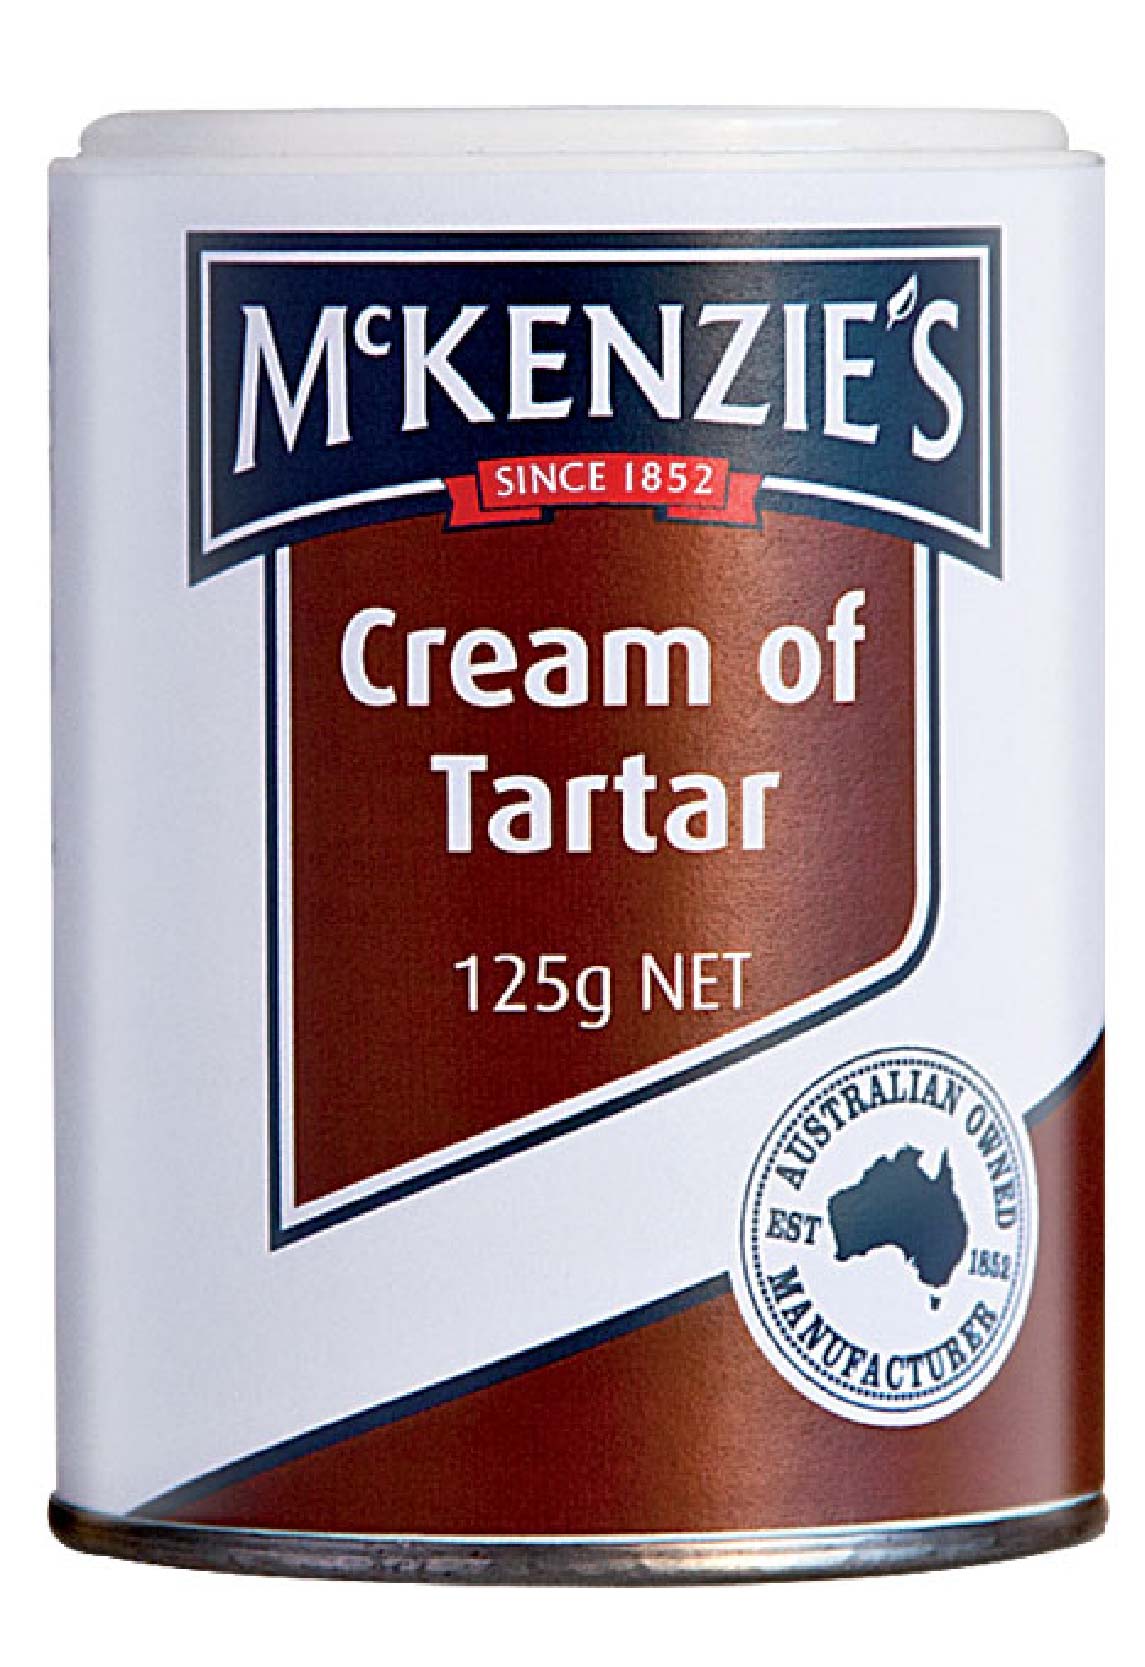 McKenzie's Cream of Tartar - McKenzie's Foods
